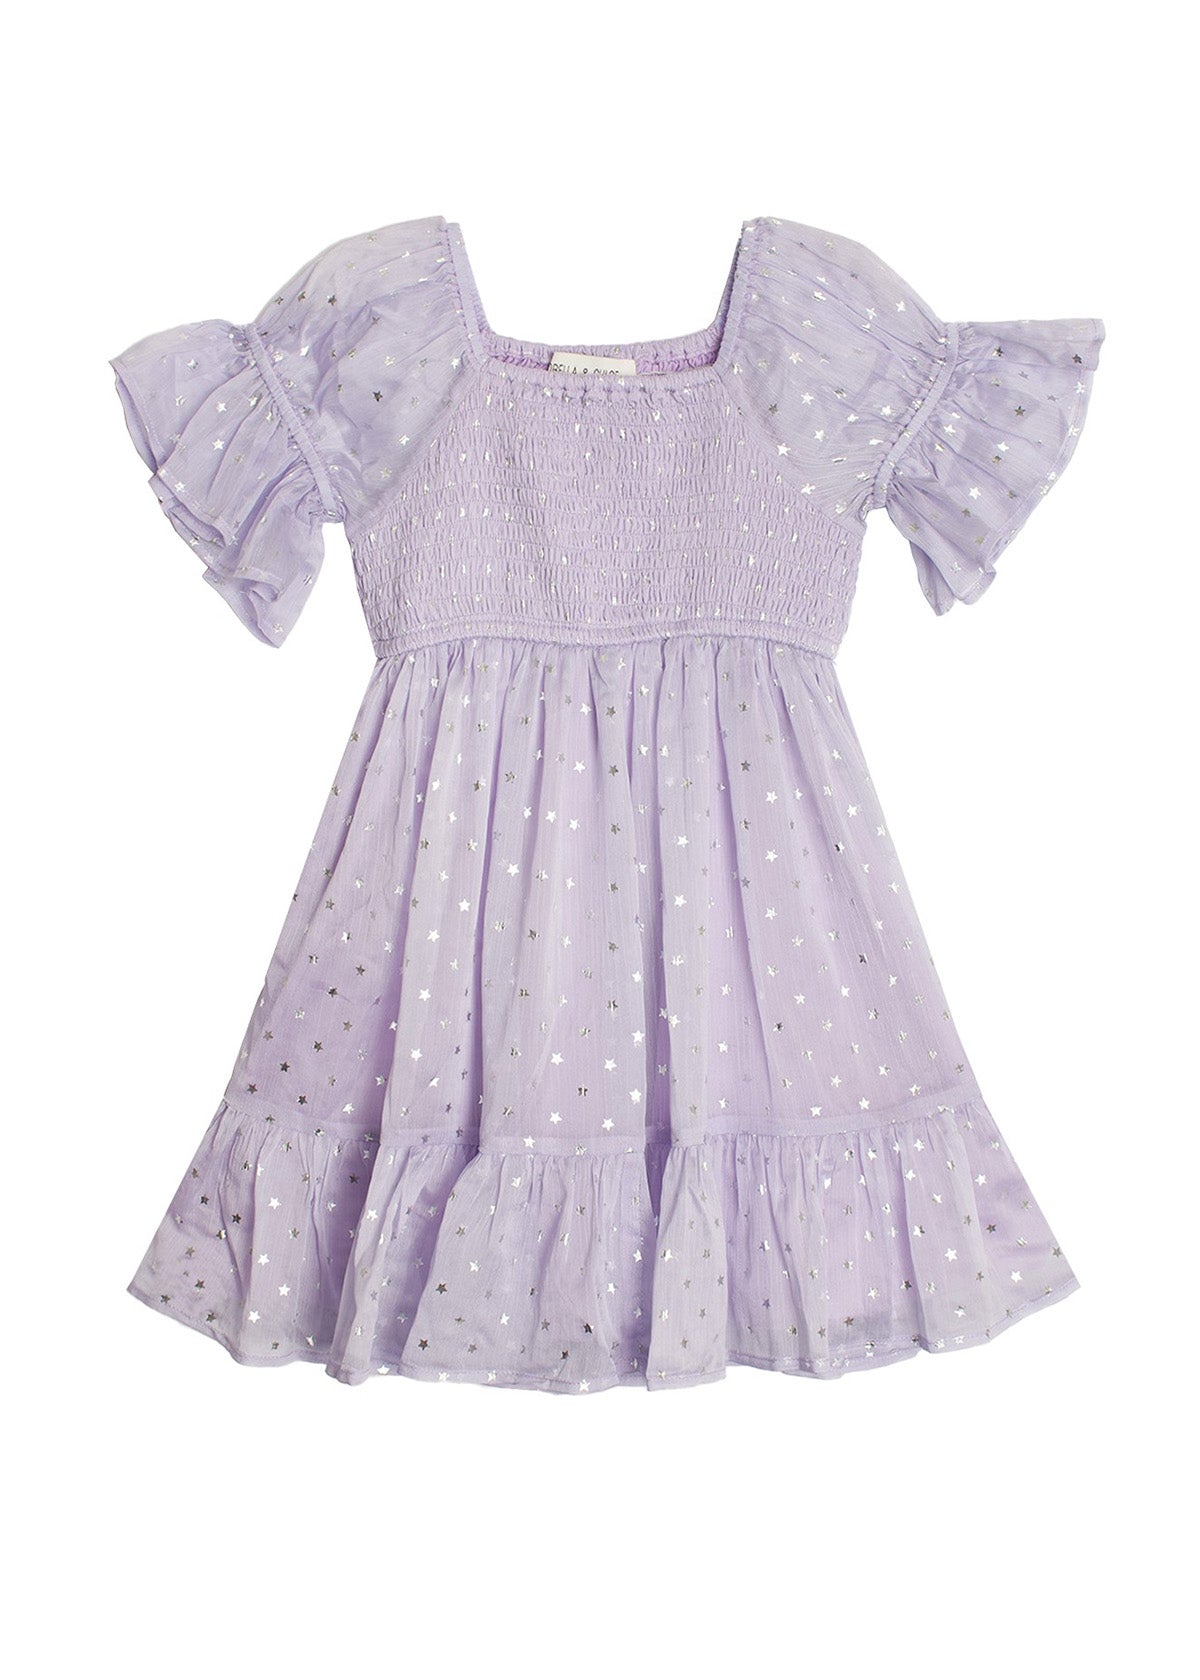 Lavender Dreams Empire Waist Dress